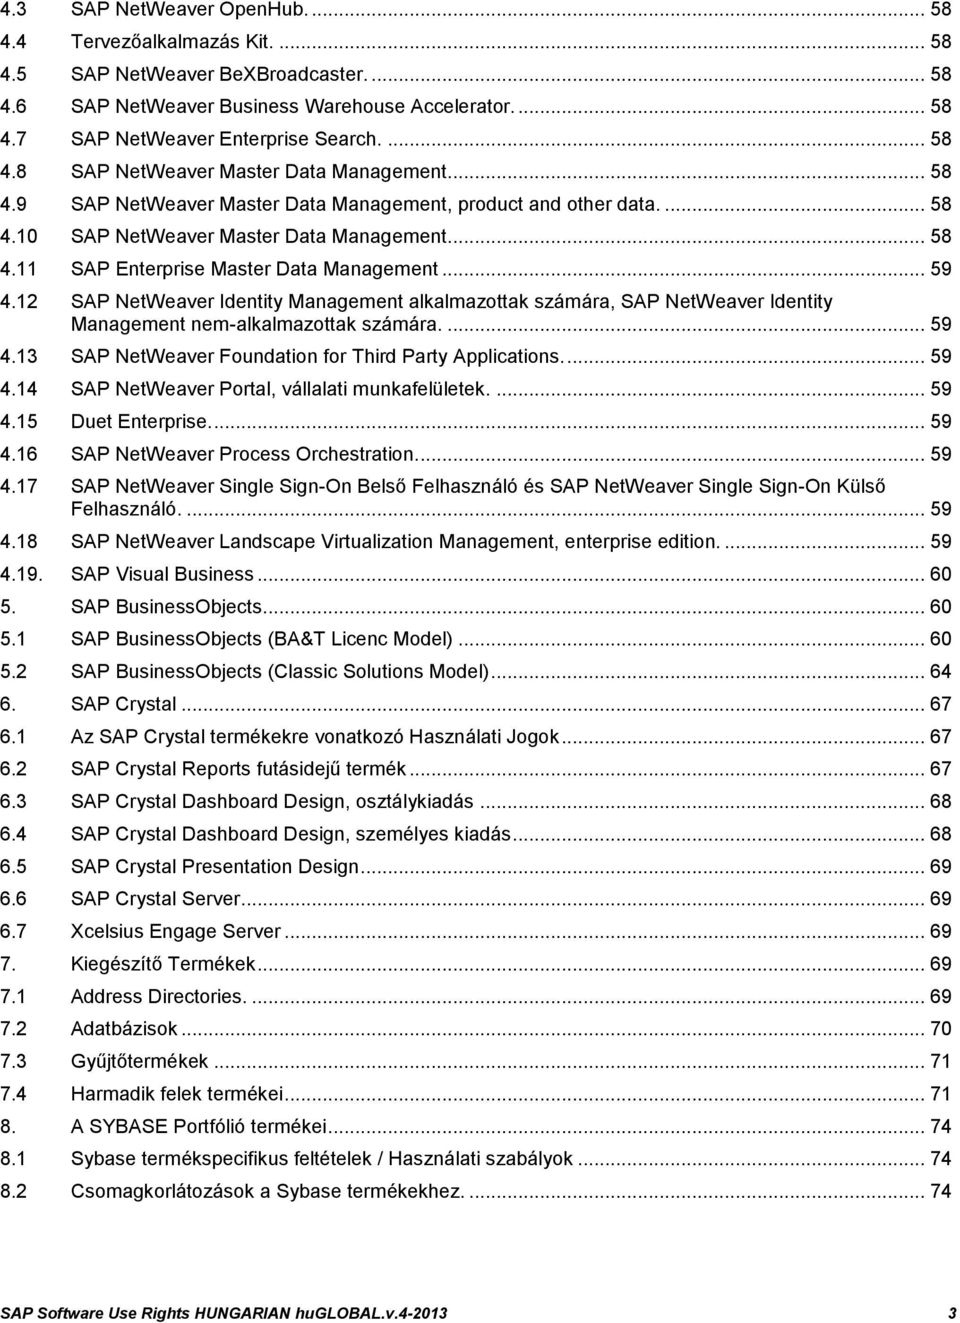 .. 59 4.12 SAP NetWeaver Identity Management alkalmazottak számára, SAP NetWeaver Identity Management nem-alkalmazottak számára.... 59 4.13 SAP NetWeaver Foundation for Third Party Applications.... 59 4.14 SAP NetWeaver Portal, vállalati munkafelületek.